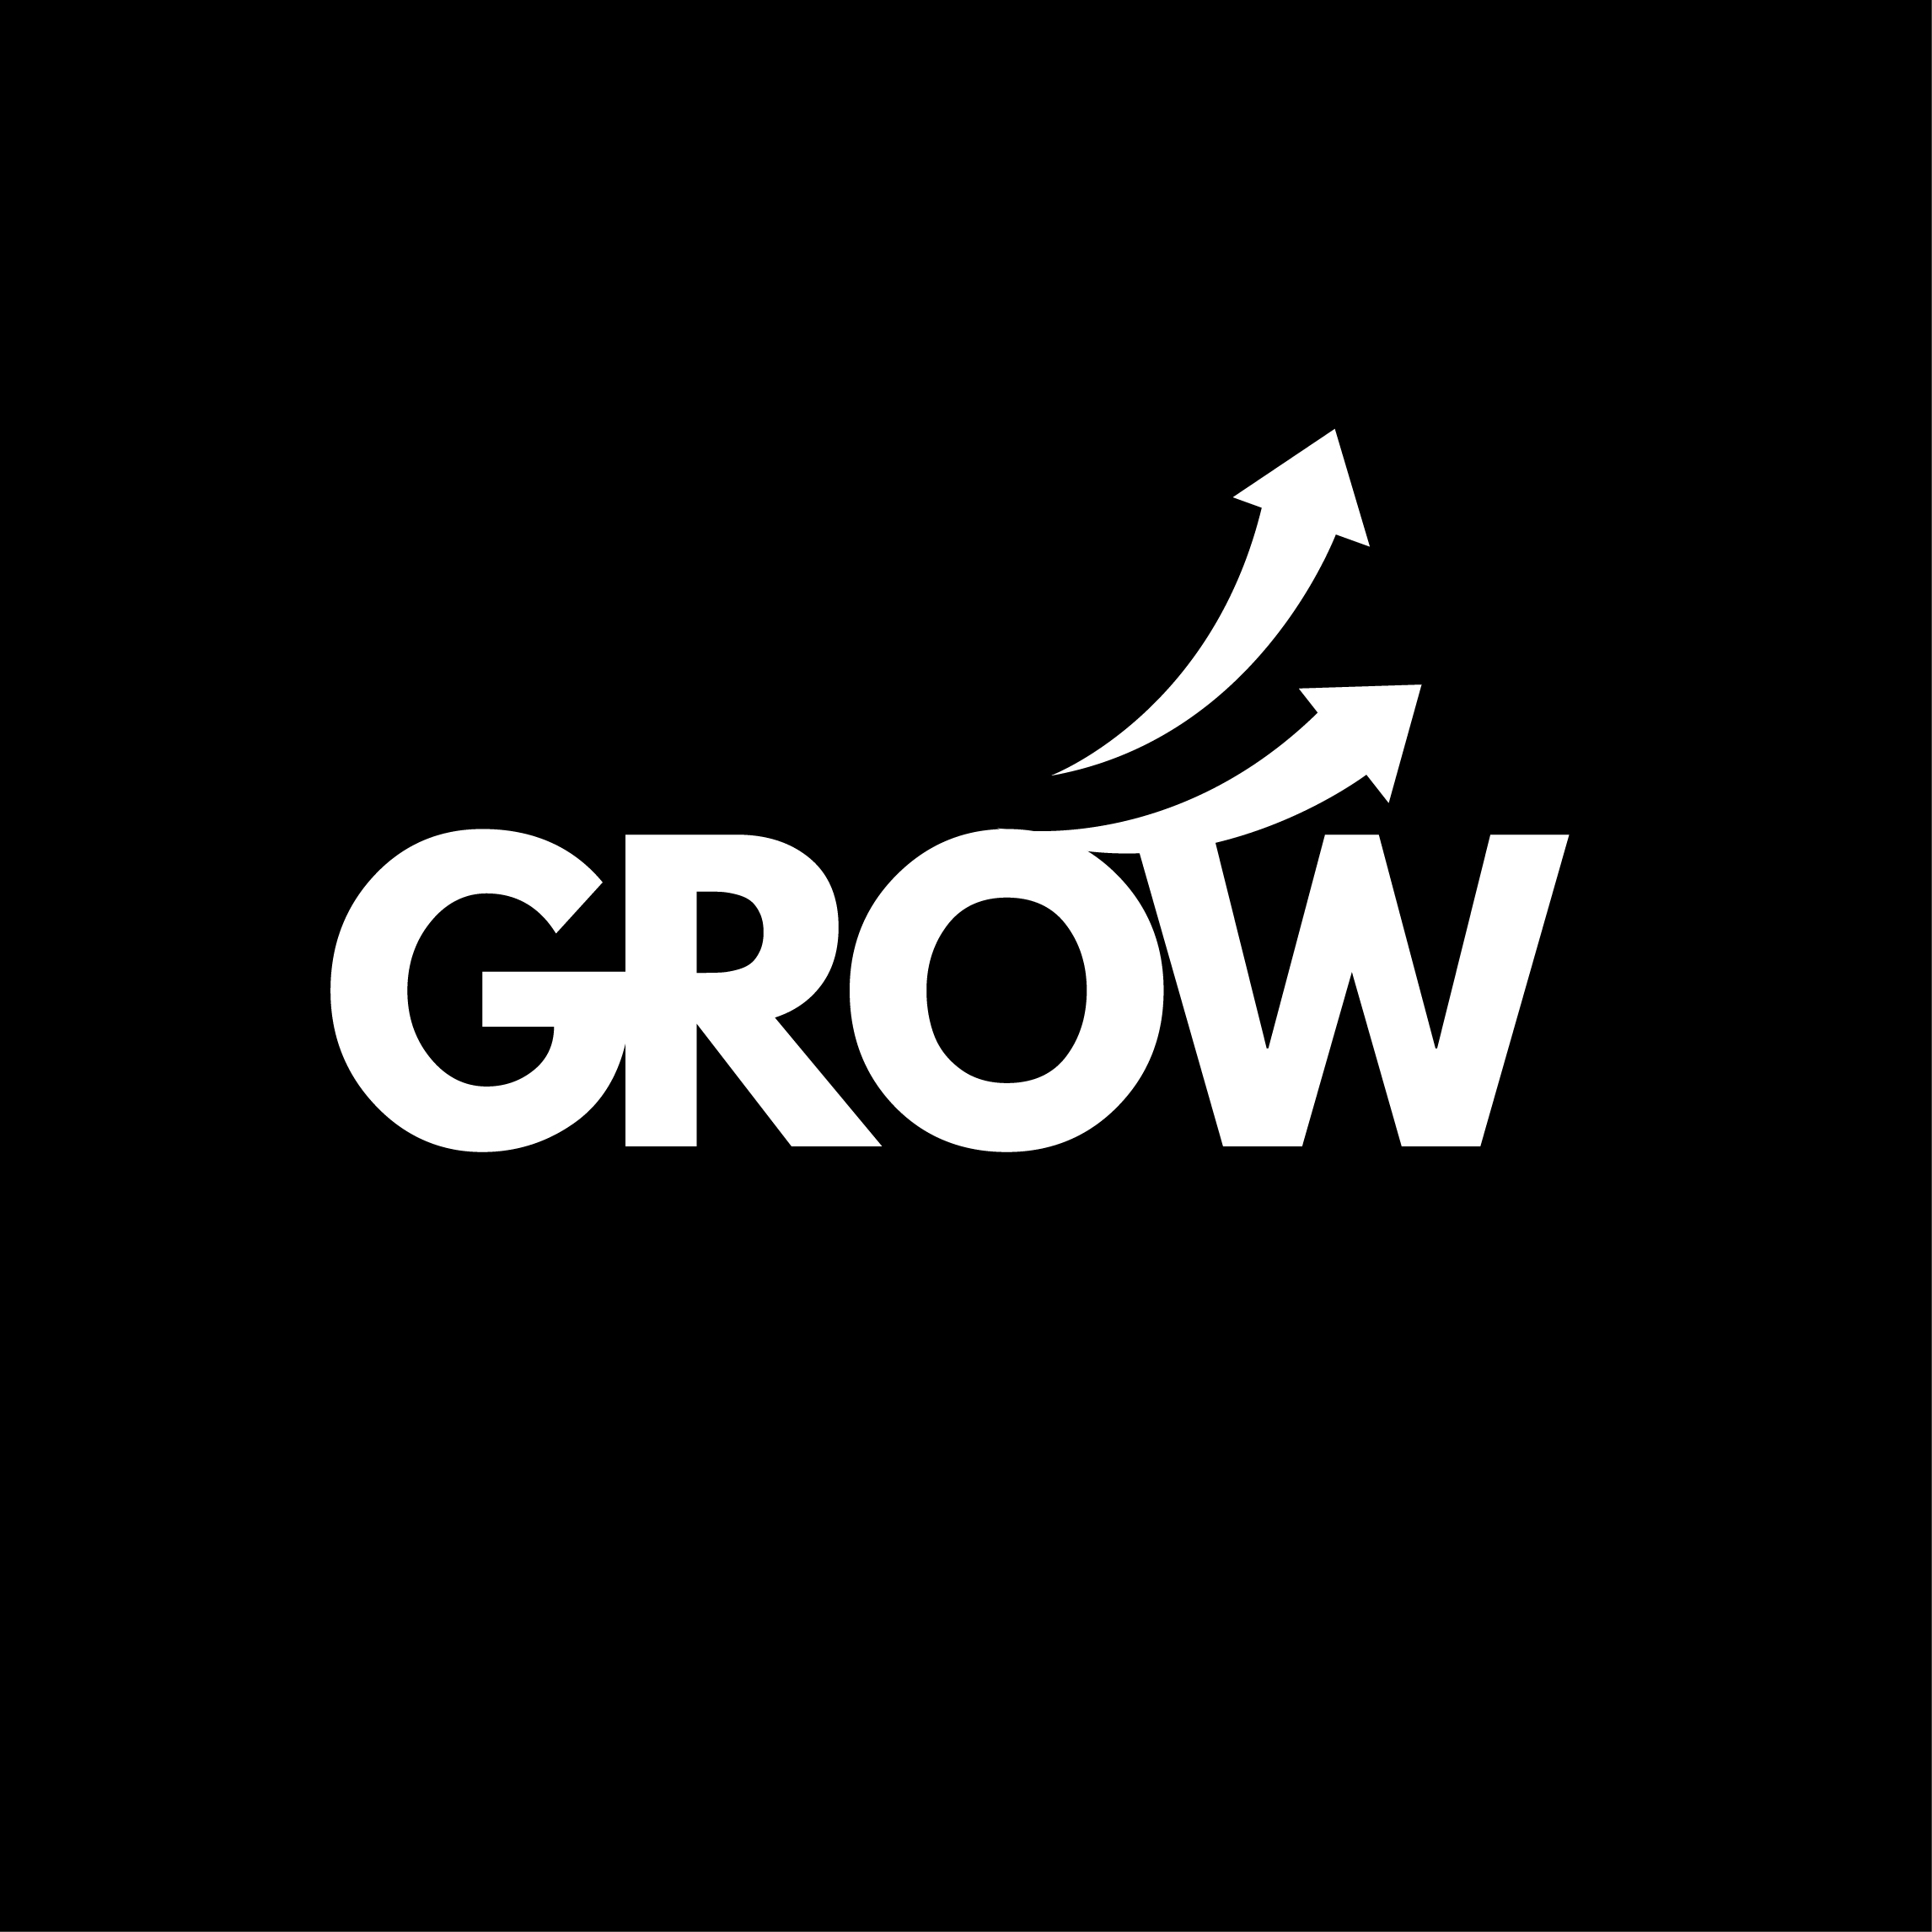 Letter GROW logo design cover image.